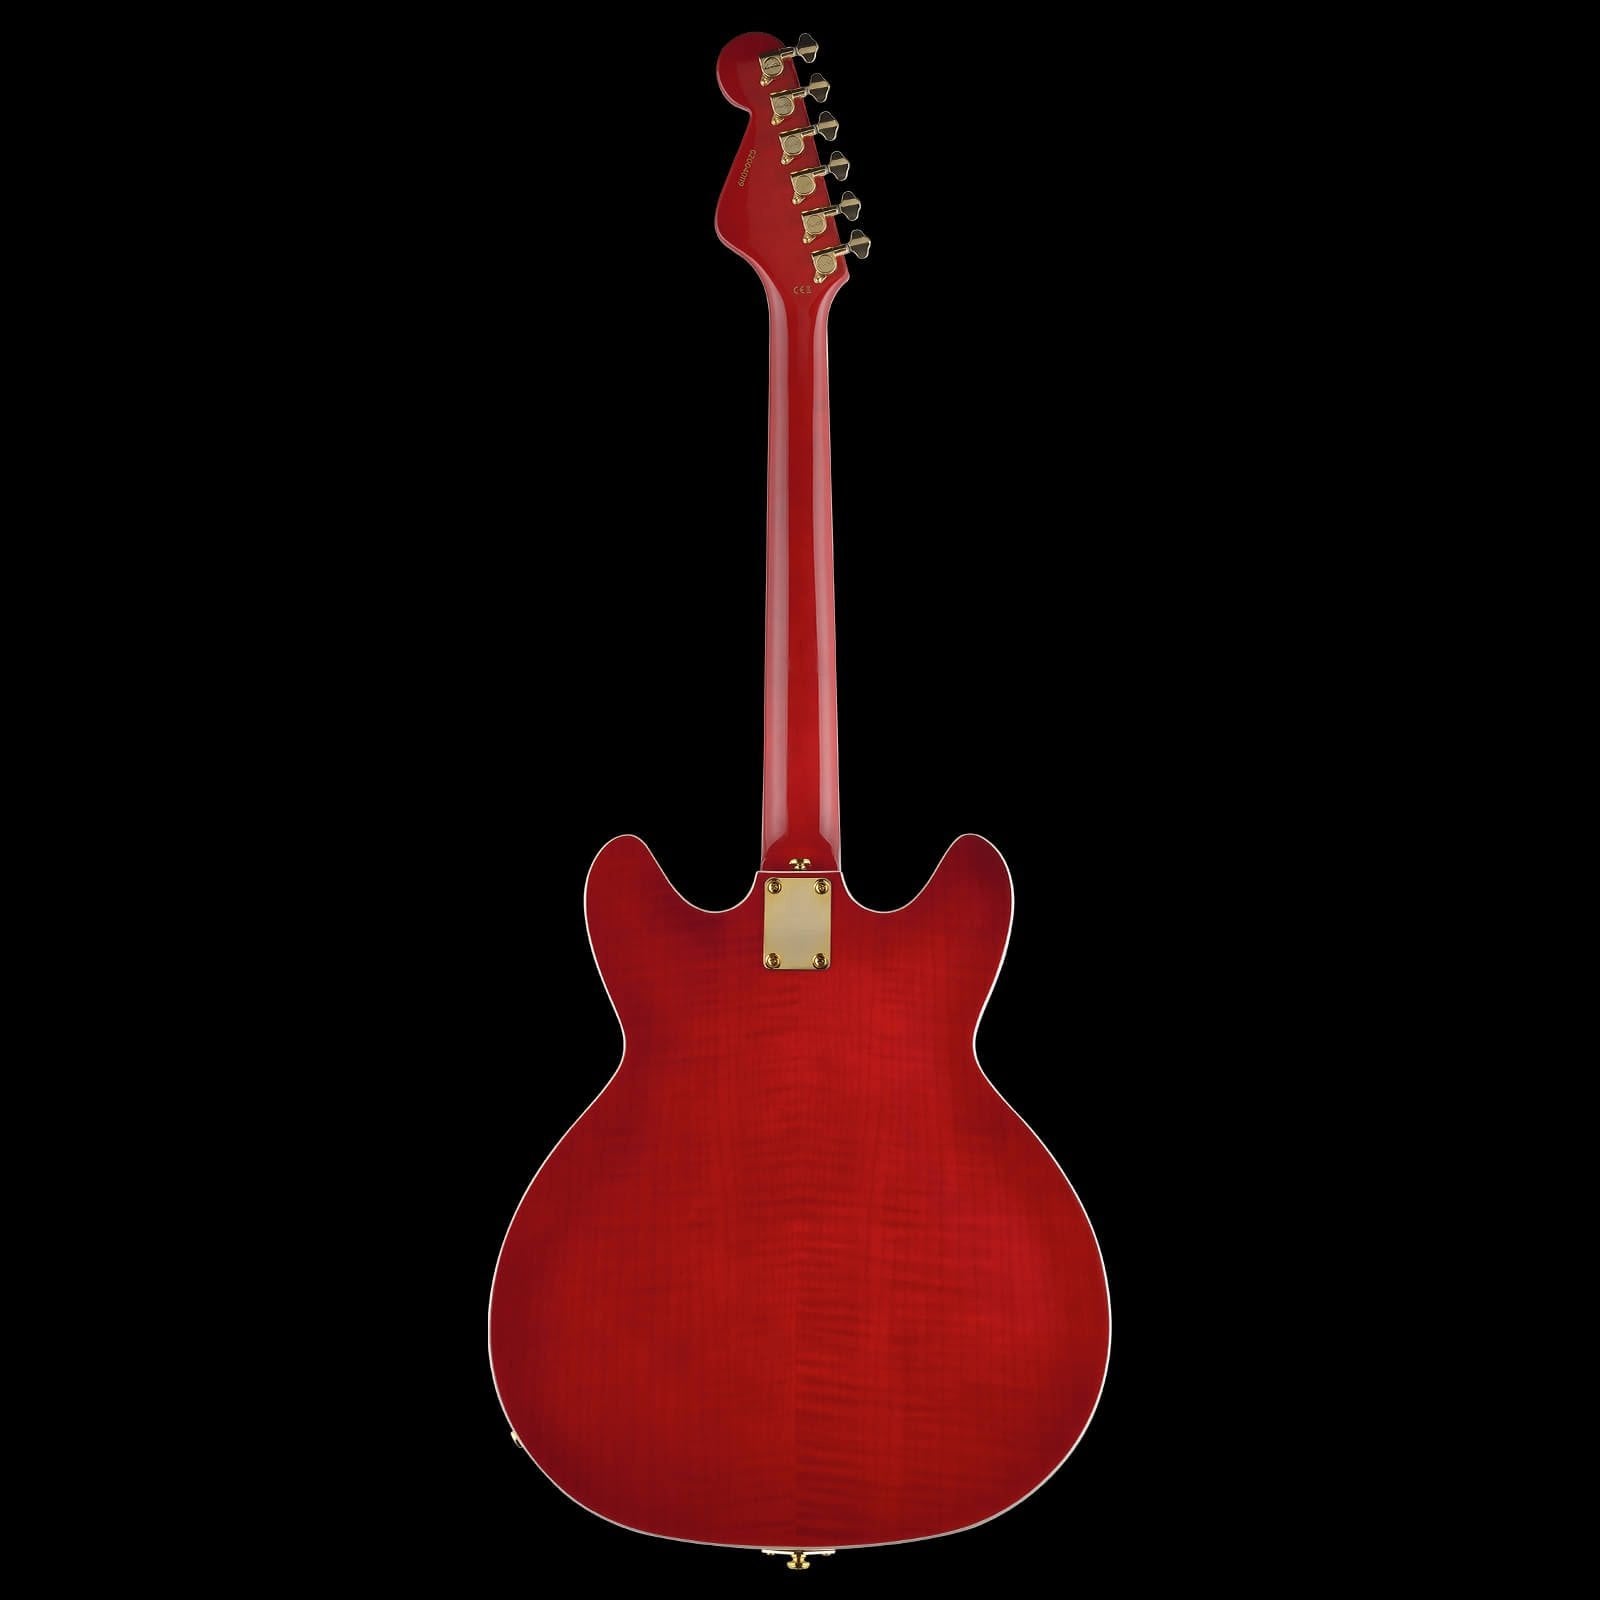 Hagstrom 67’ Viking II Semi-Hollow Guitar in Wild Cherry Transparent